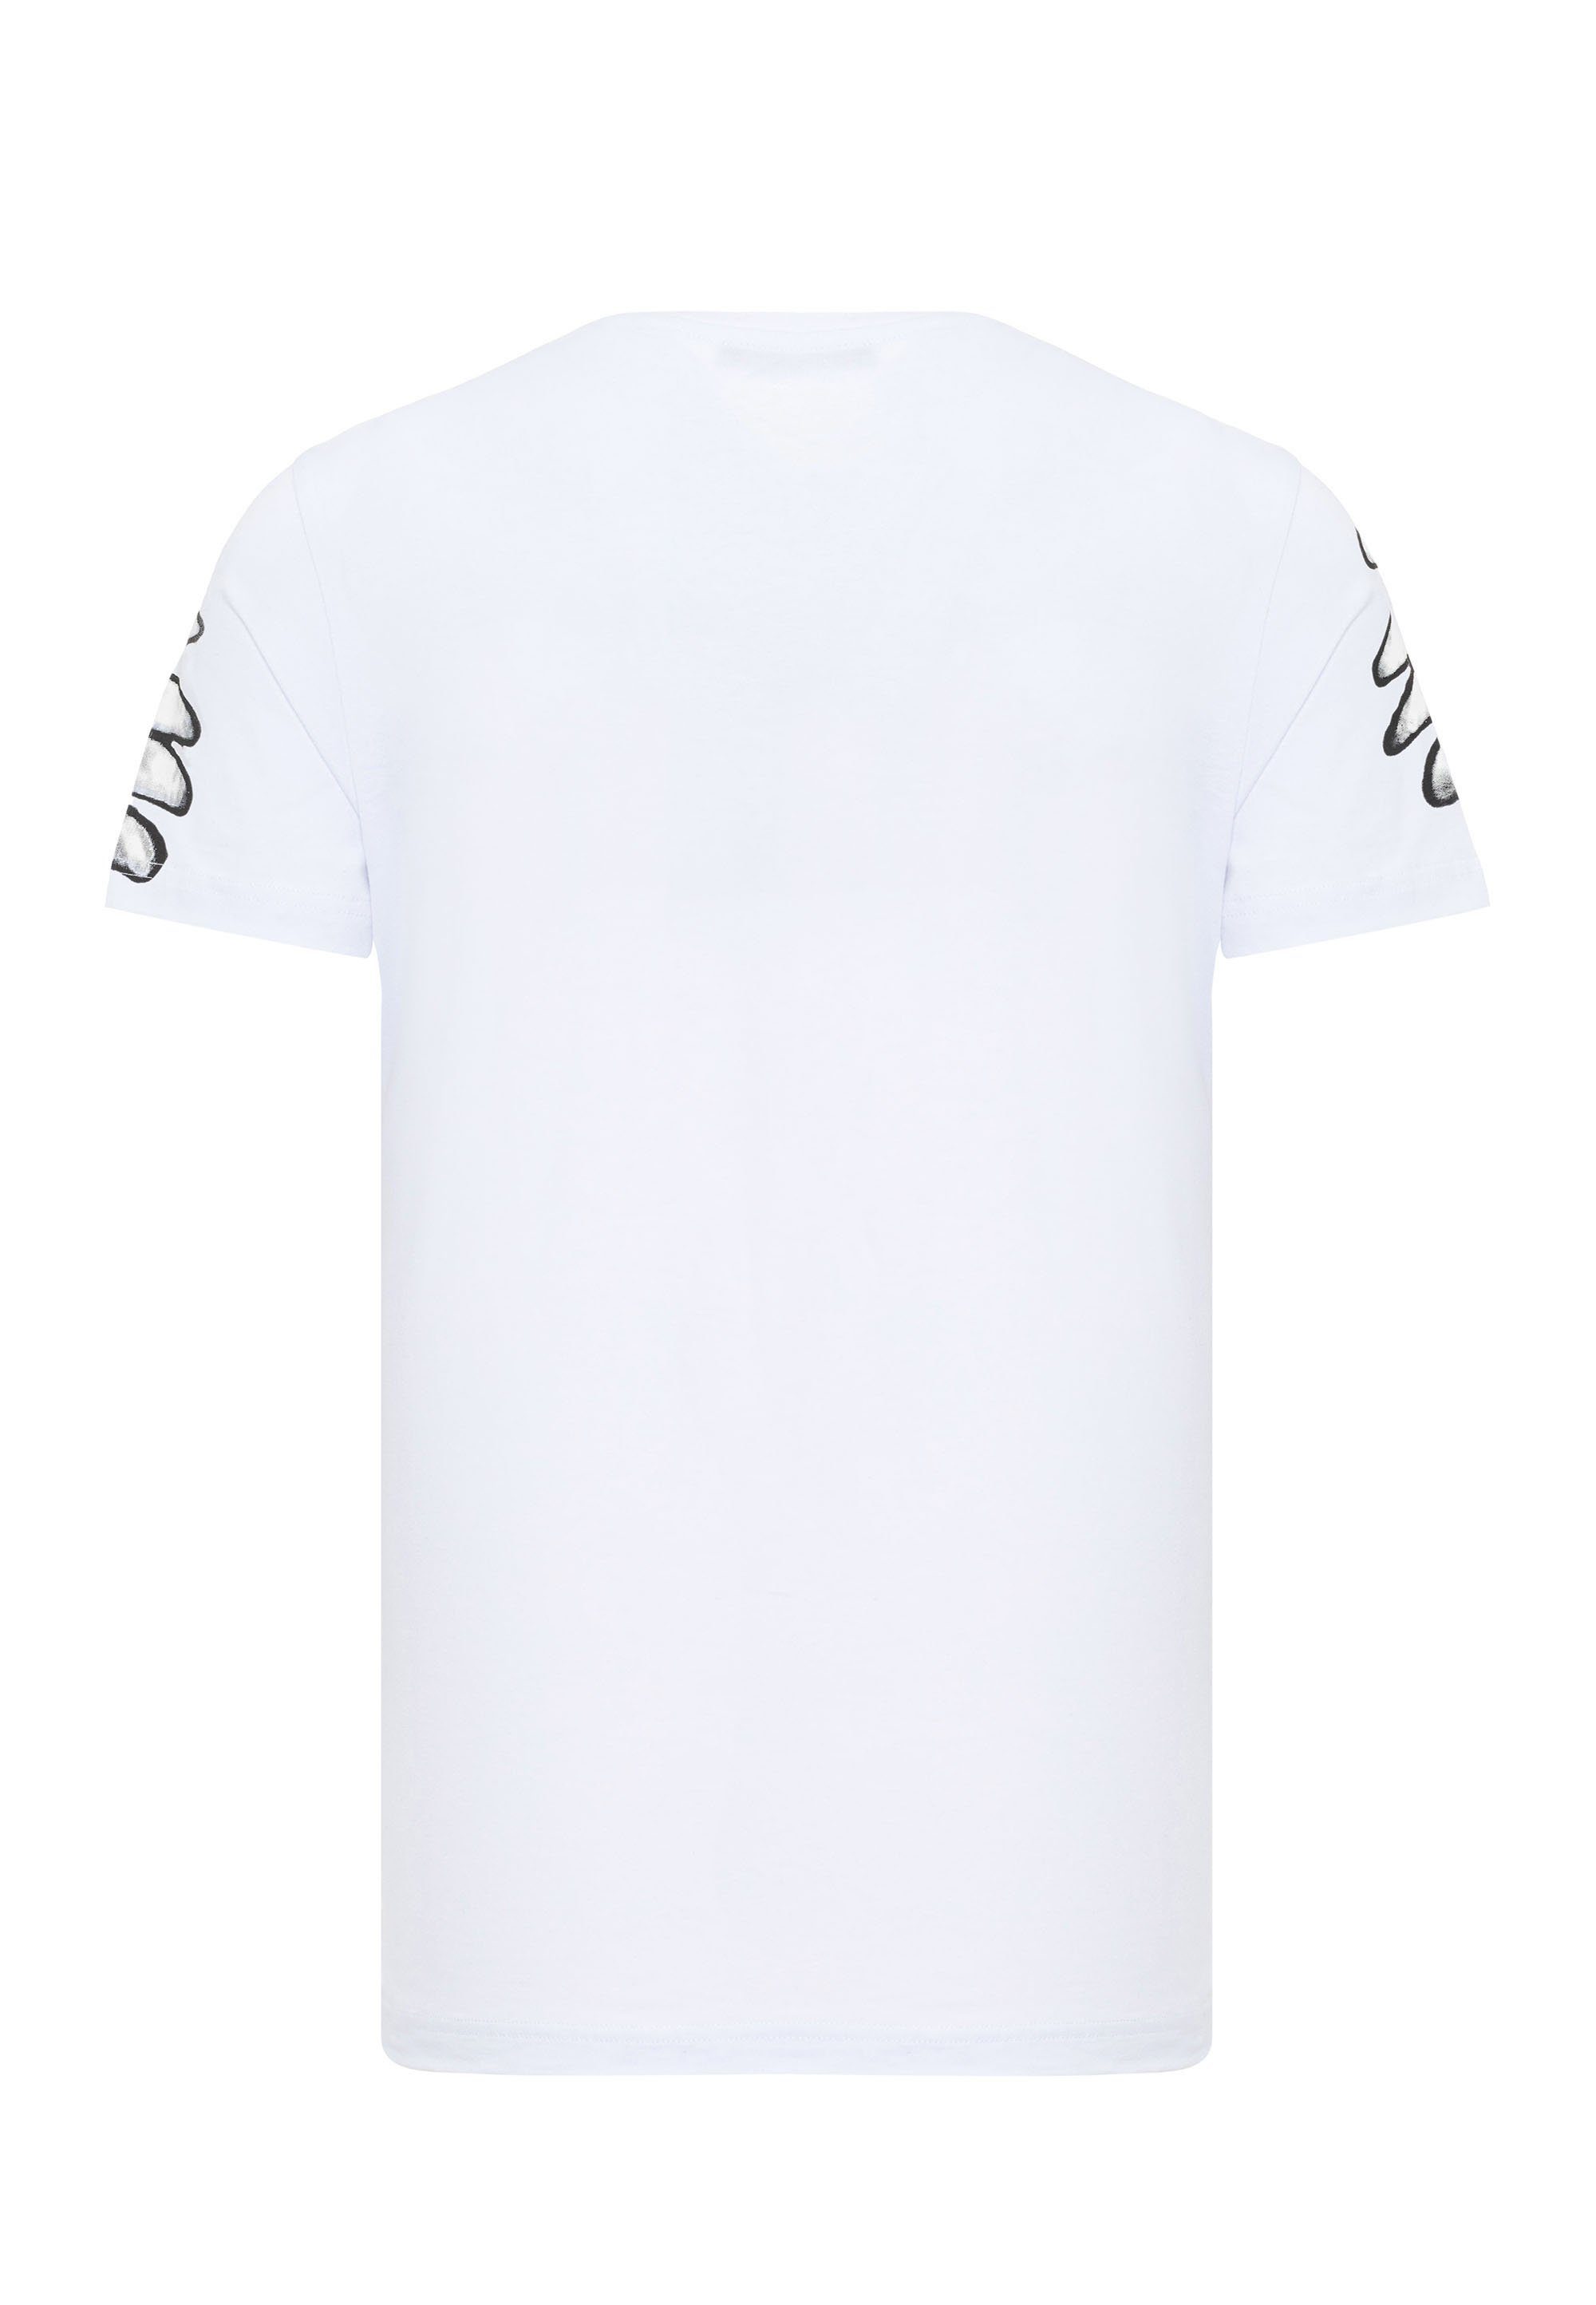 Cipo & Baxx weiß rockigem T-Shirt in Look